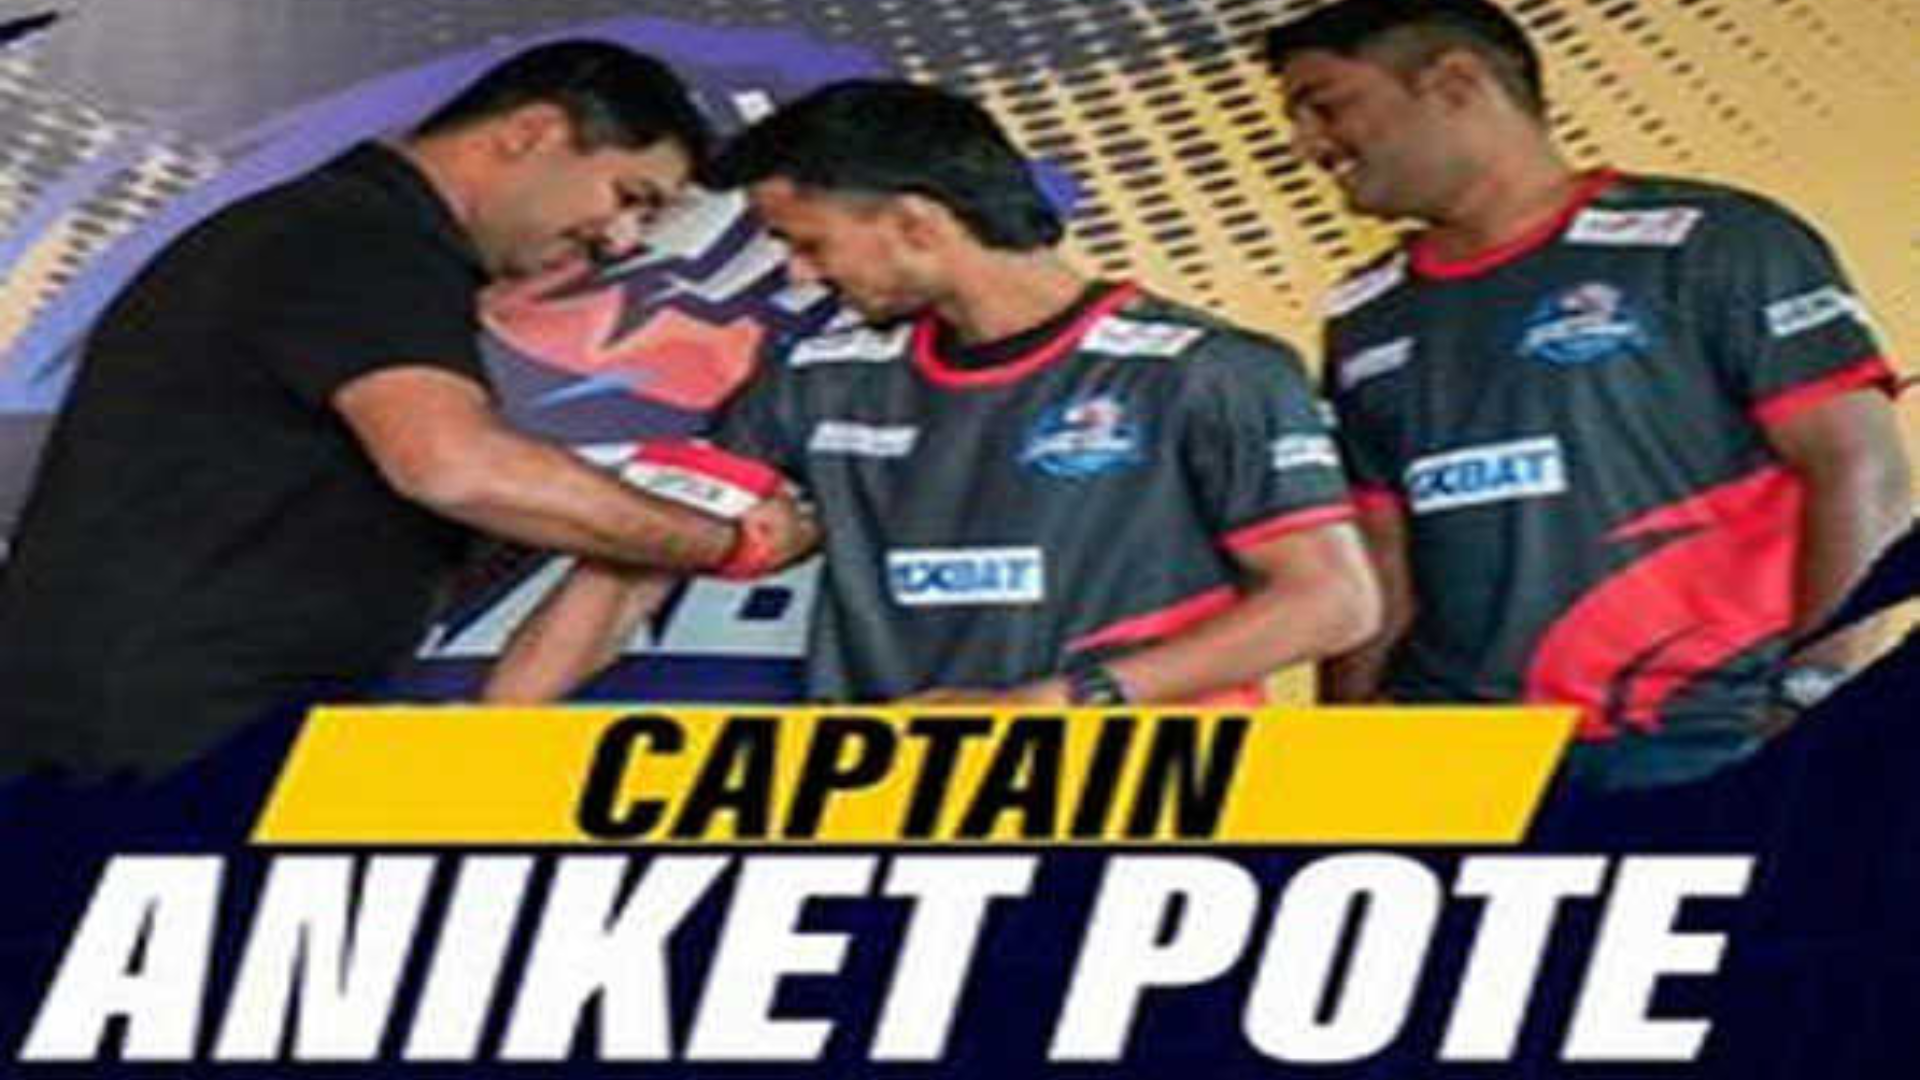 Aniket Pote will be the captain of the Mumbai Khiladis for Ultimate Kho Kho Season 2